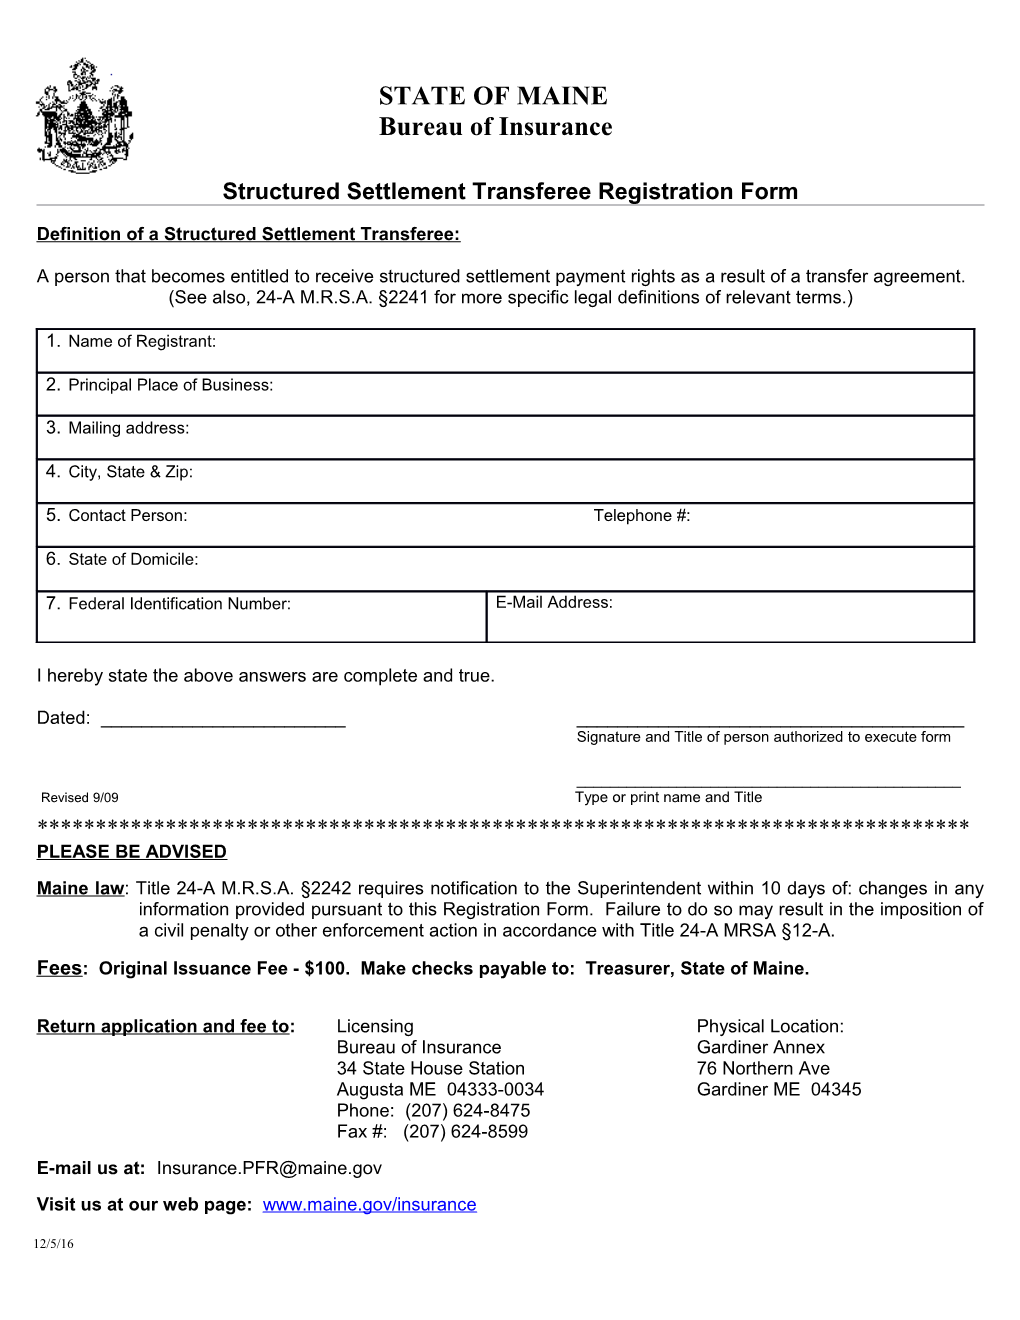 Structured Settlement Transferee Registration Form